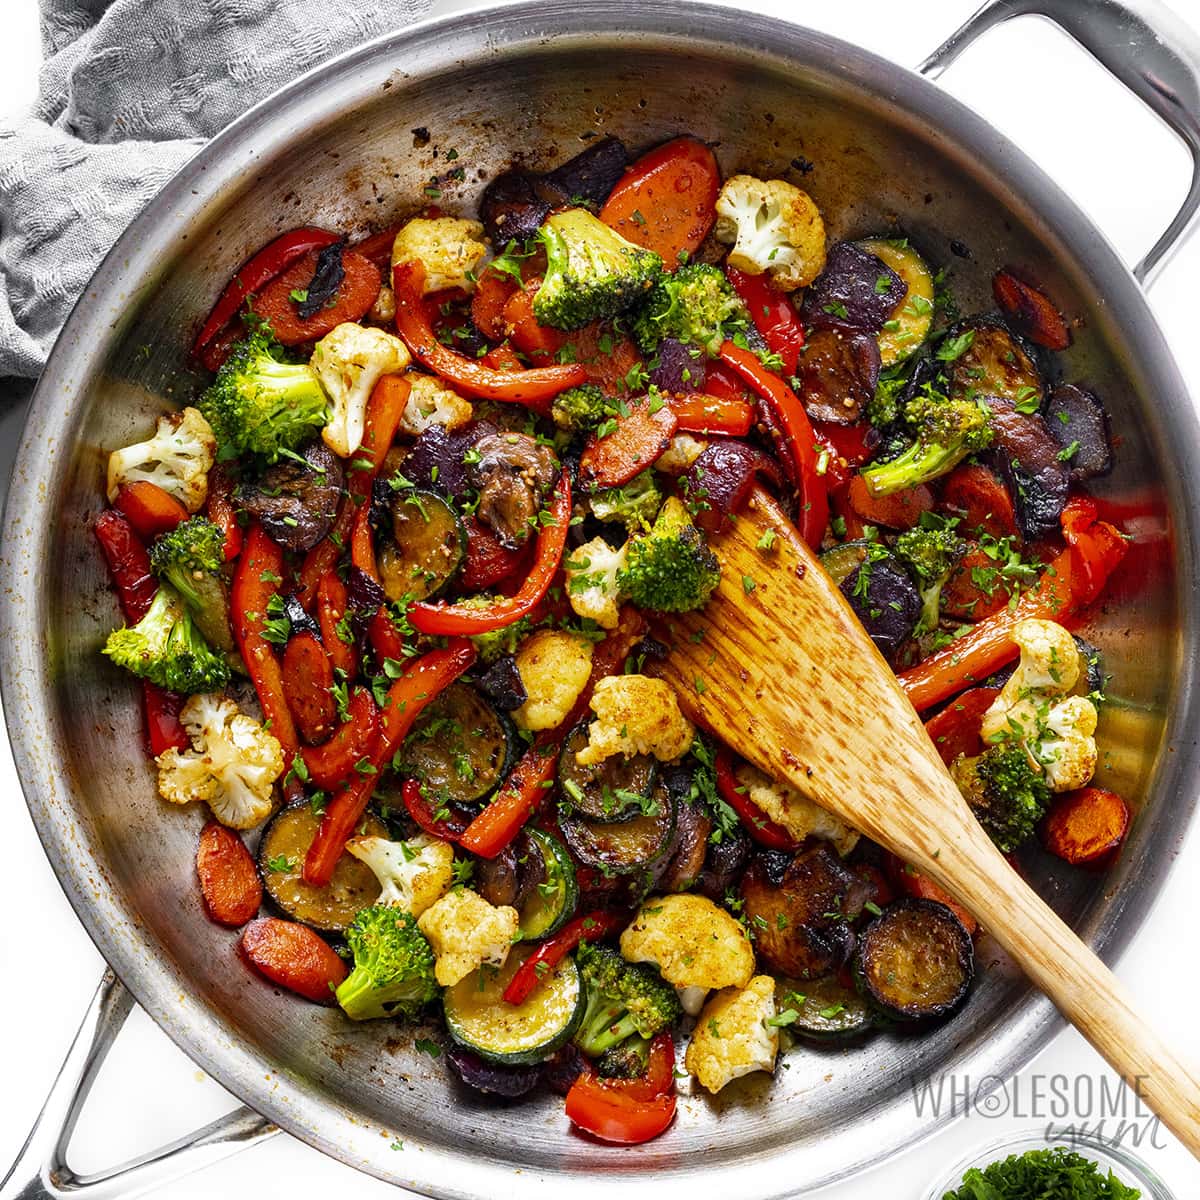 Sauteed Vegetables Recipe (20 Minutes!)